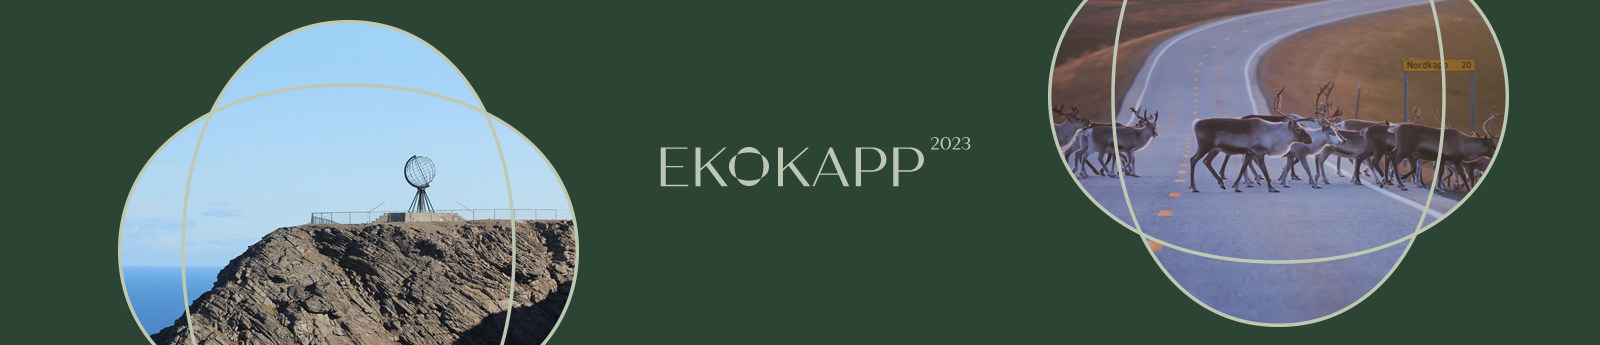 EkoKapp – projekt zeroemisyjny